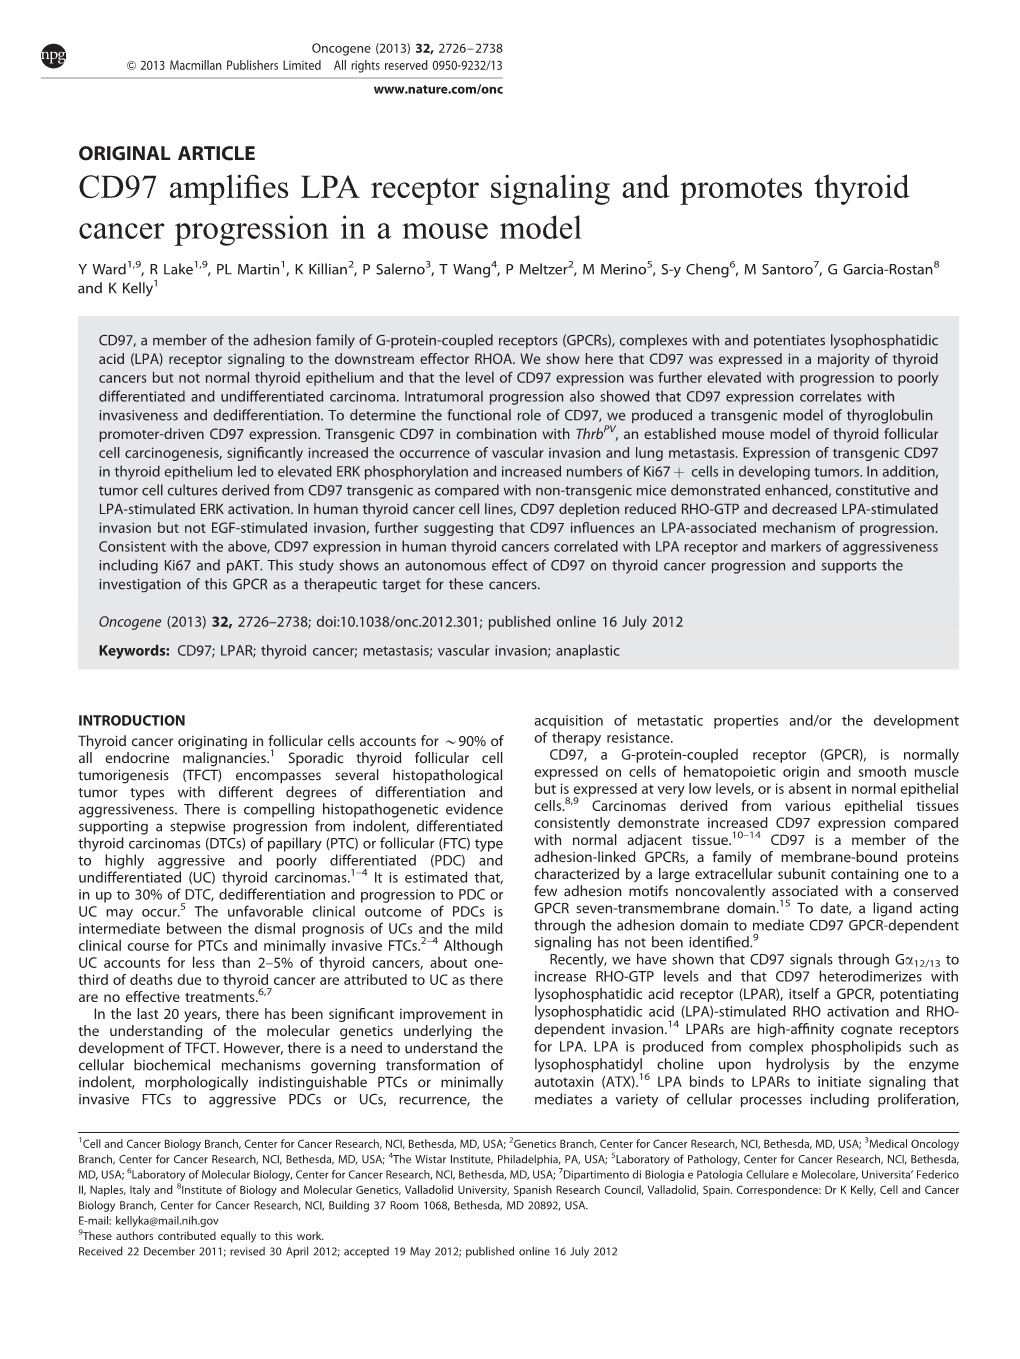 CD97 Amplifies LPA Receptor Signaling and Promotes Thyroid